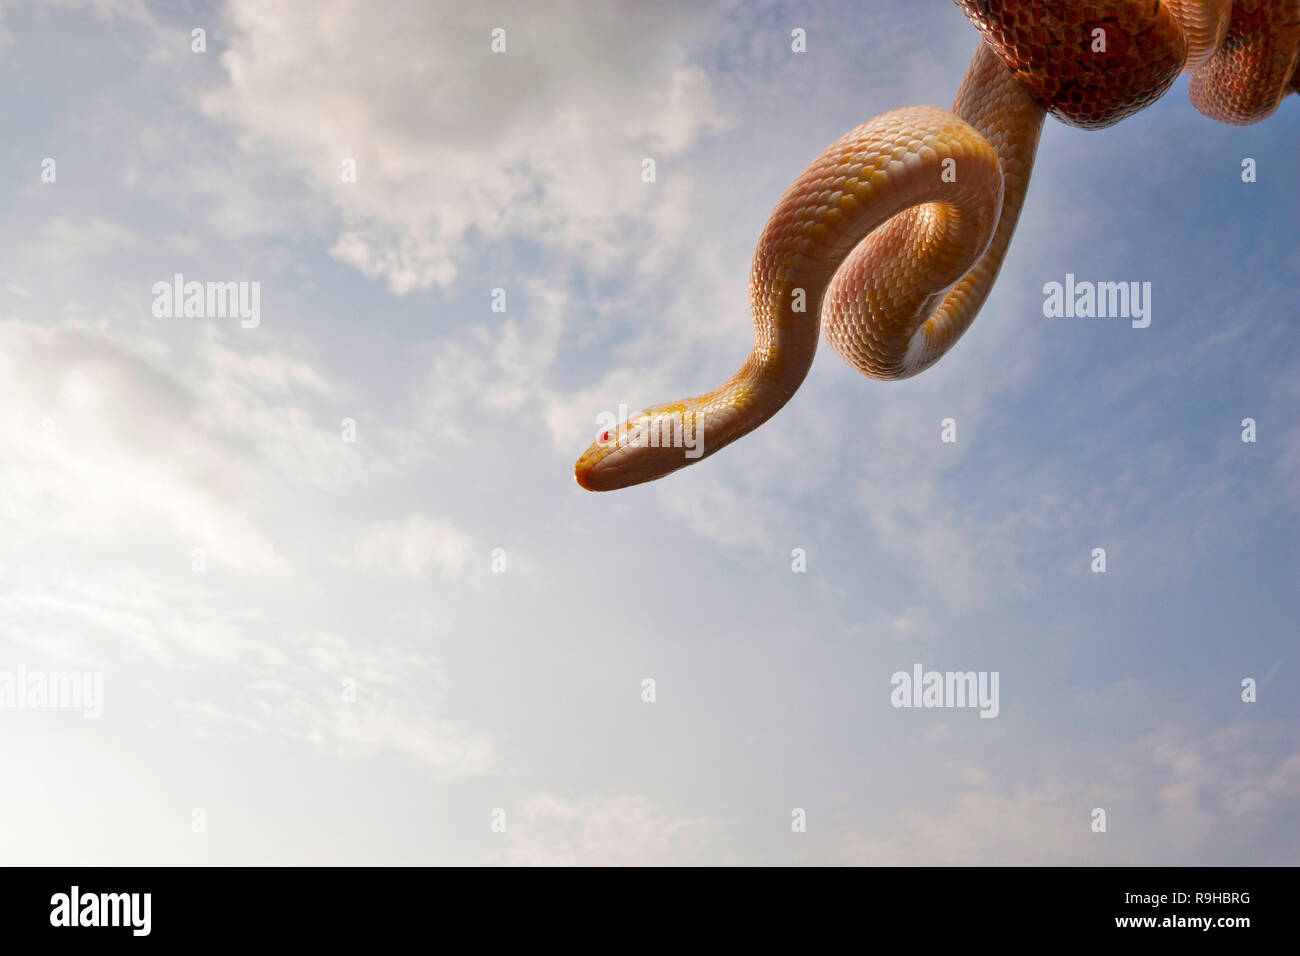 A corn snake (Pantherophis guttatus) on a sky background Stock Photo